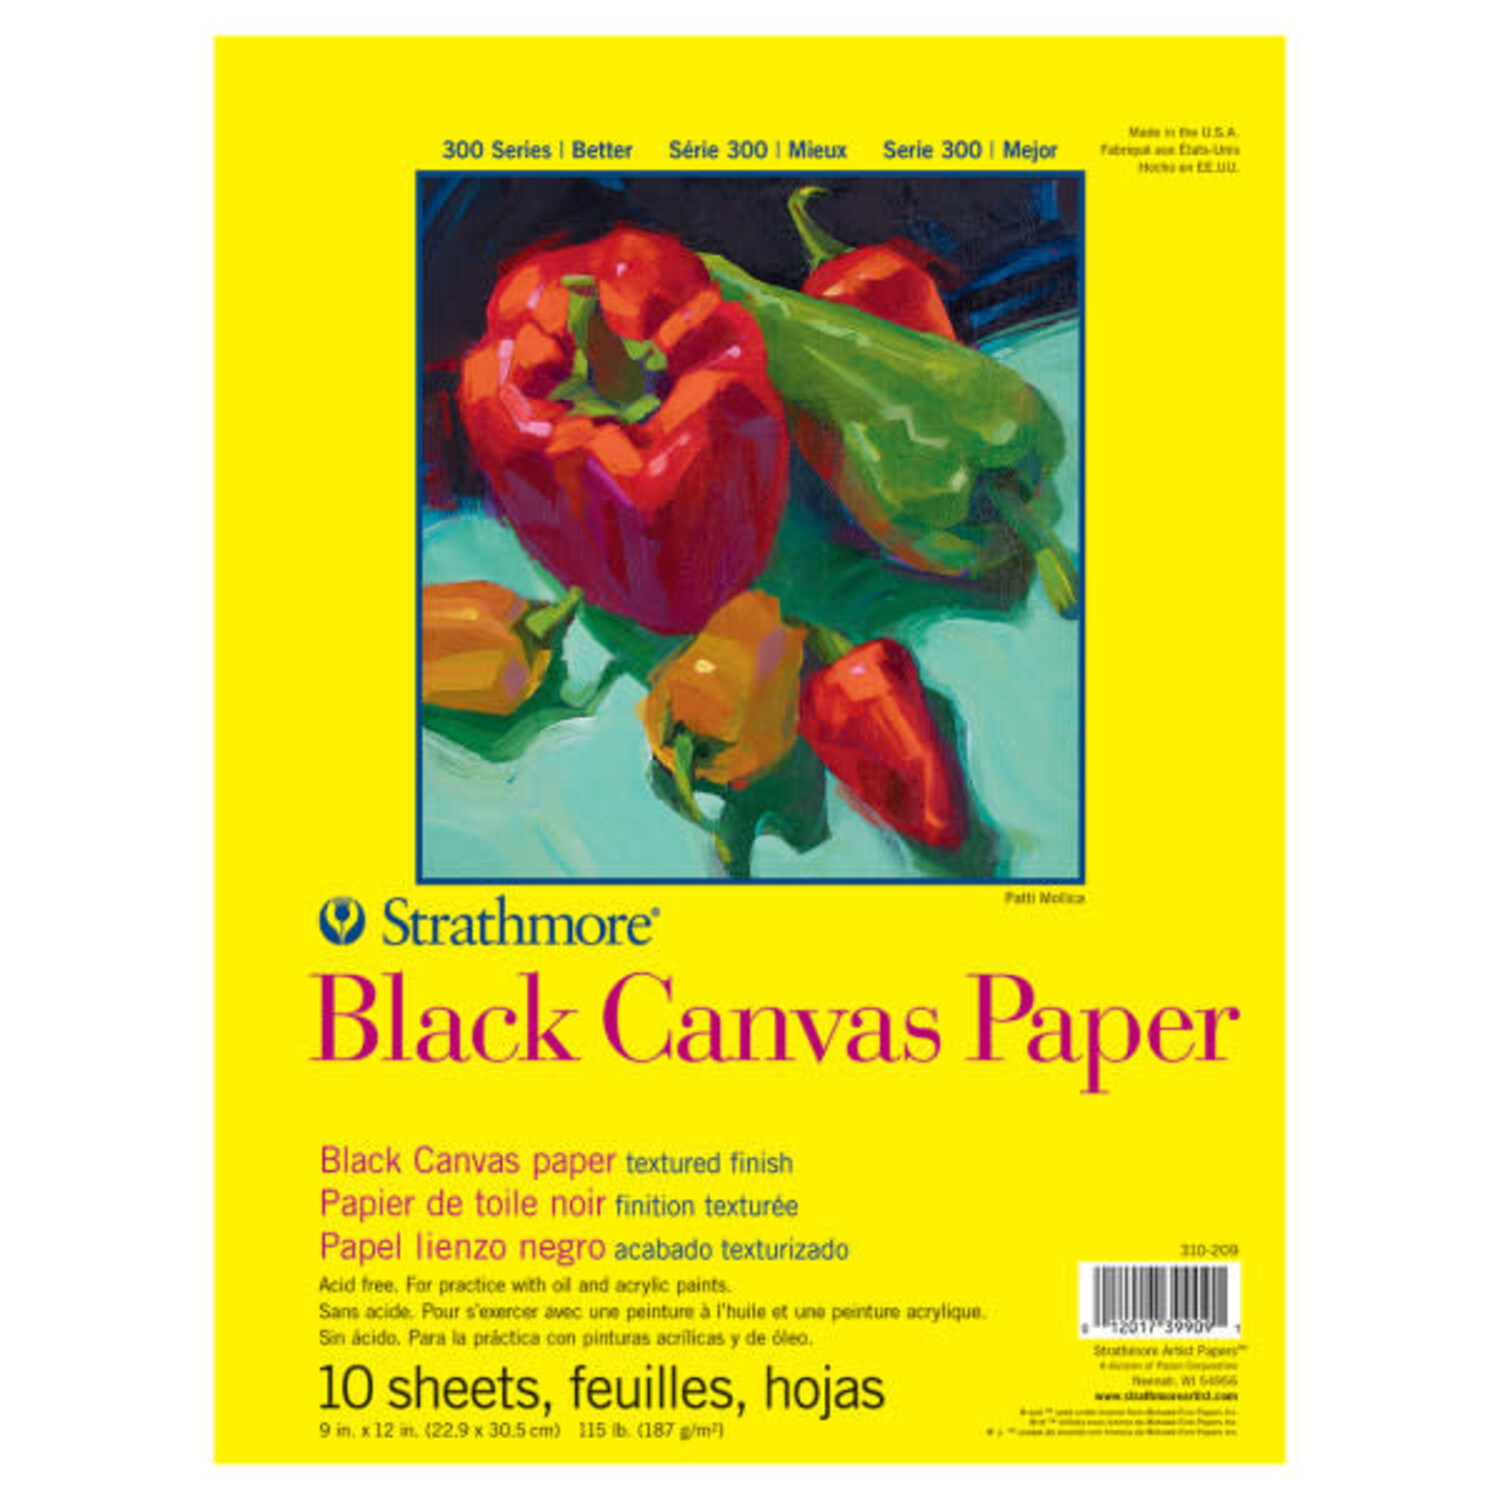 BLACK CANVAS PAPER PAD 300 SERIES 10 SHEETS 9X12 - Artist Corner